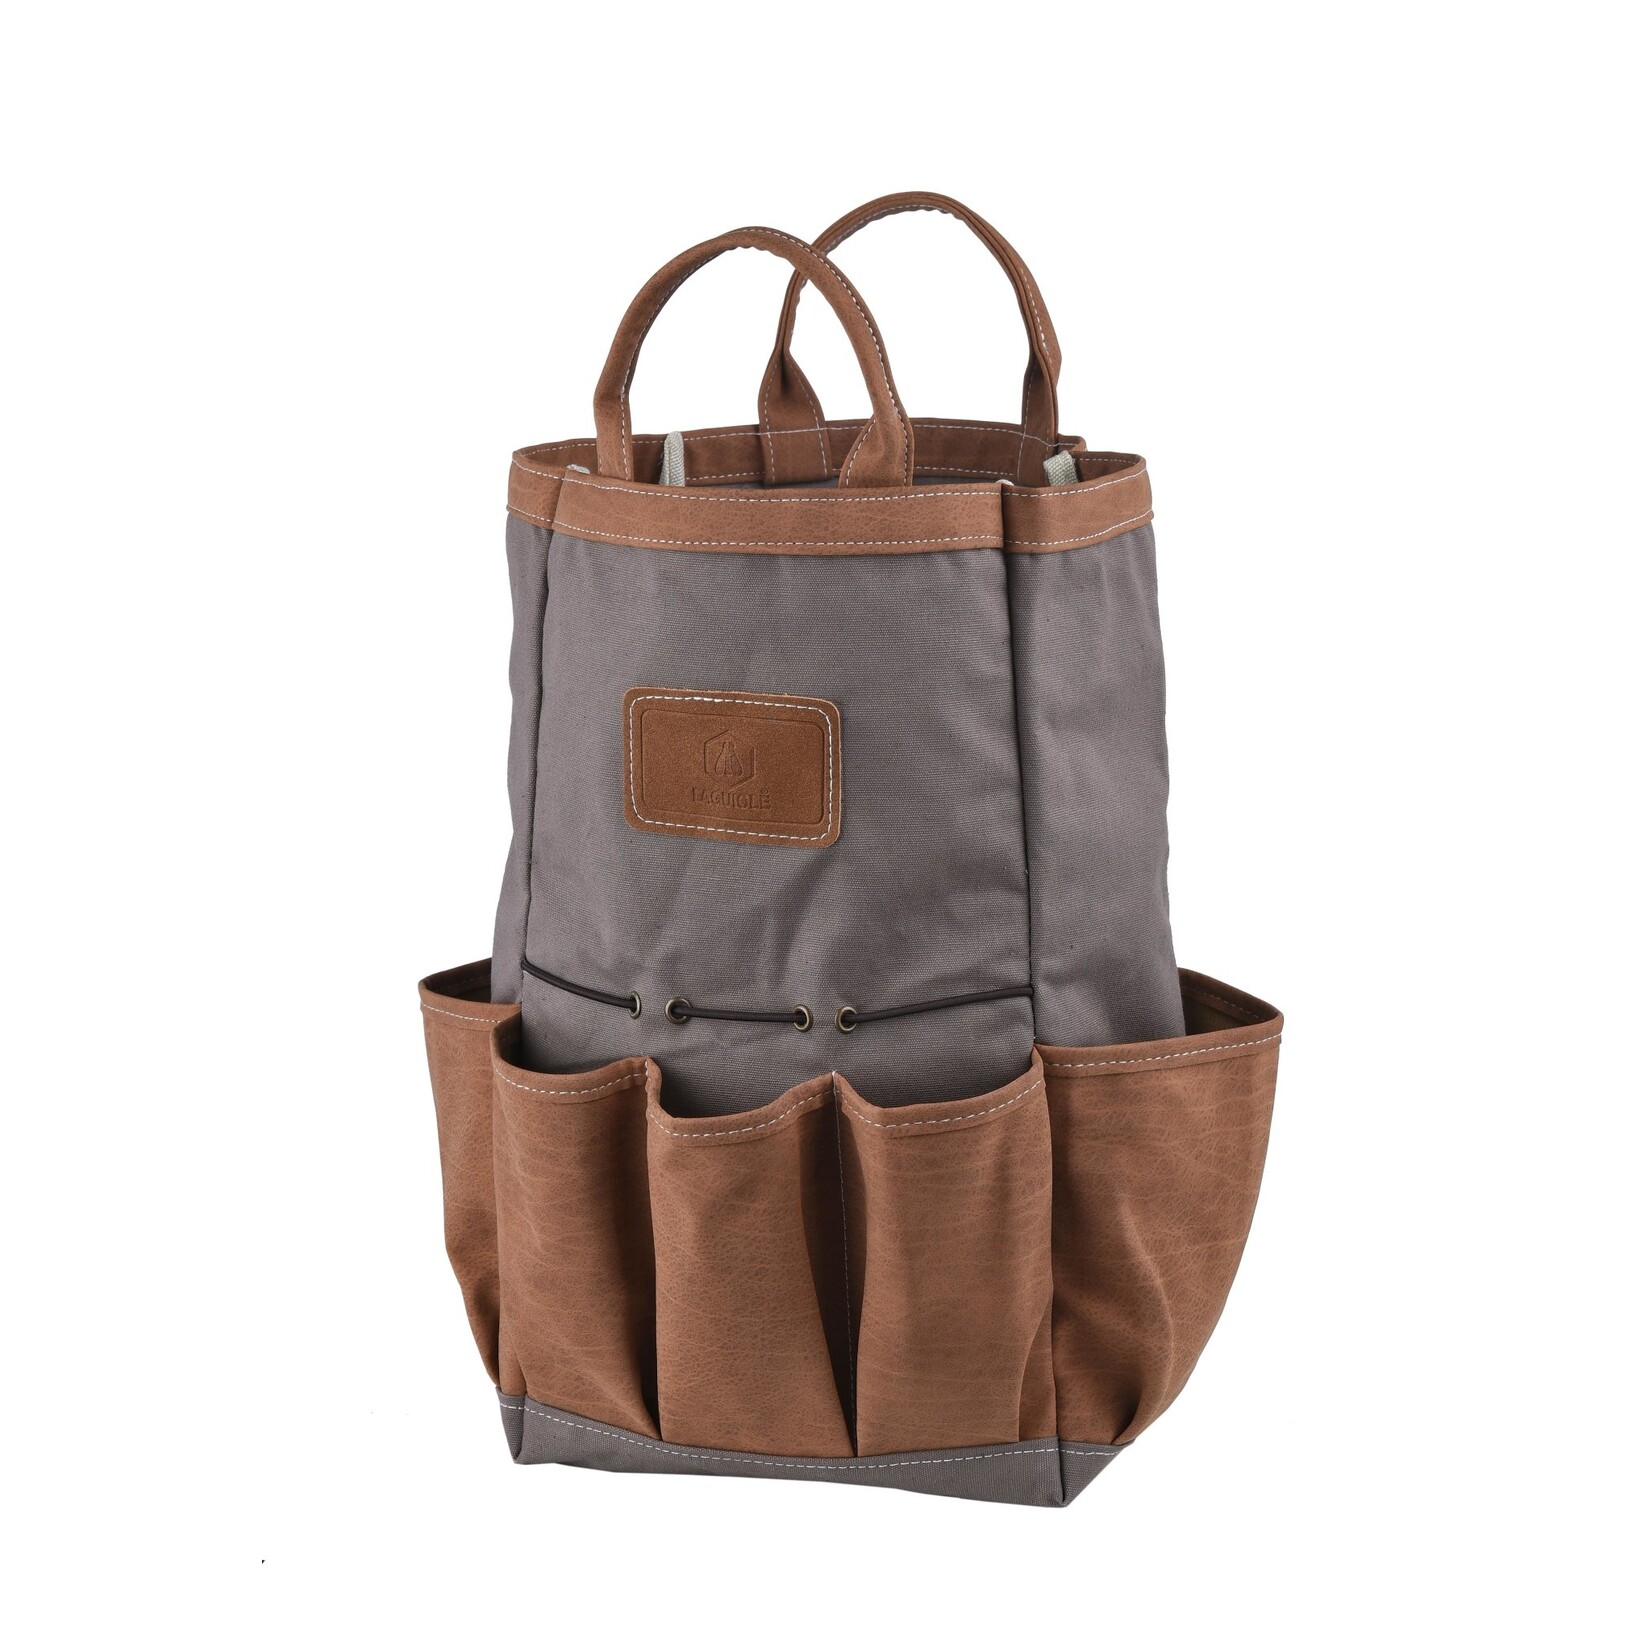 Laguiole Waterproof bag for 8 garden tools